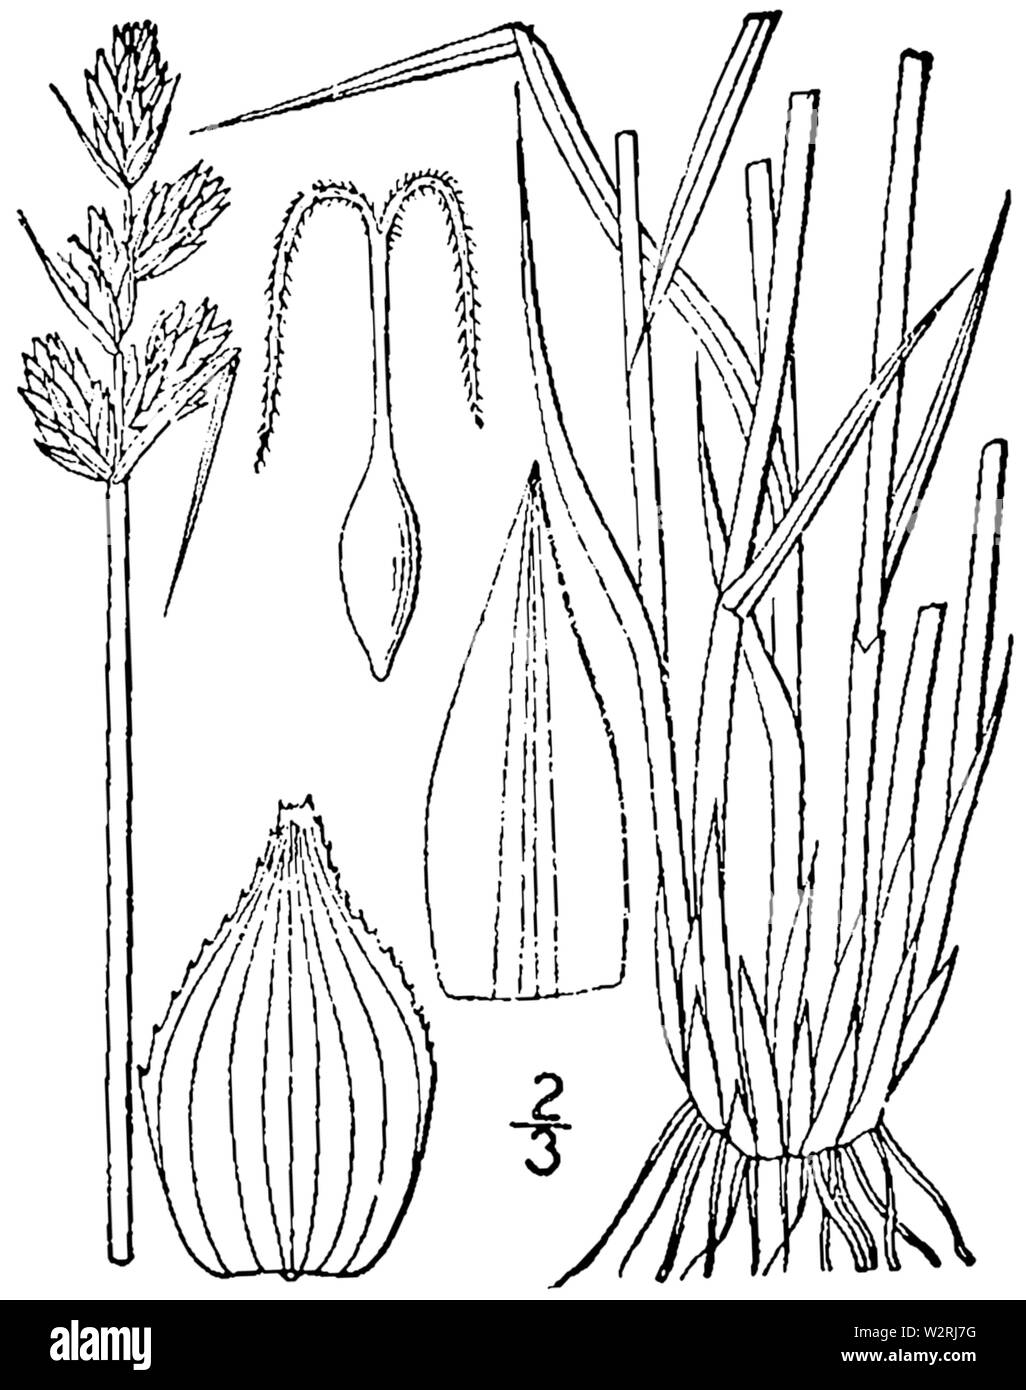 Carex adusta drawing 1 Stock Photo